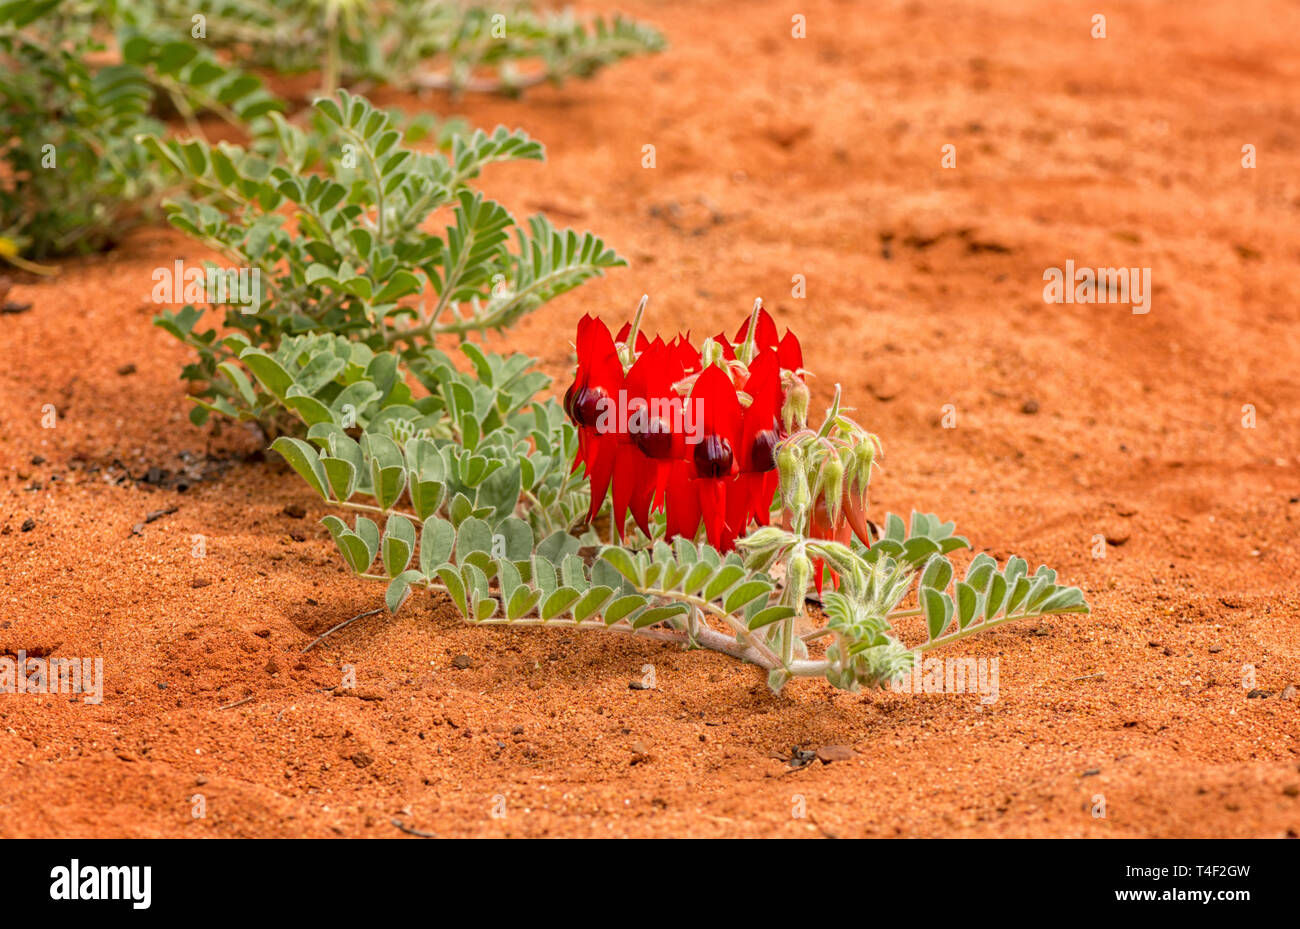 Swainsona formosa, Fabaceae, flower emblem of South Australia often found in the desert. Stock Photo